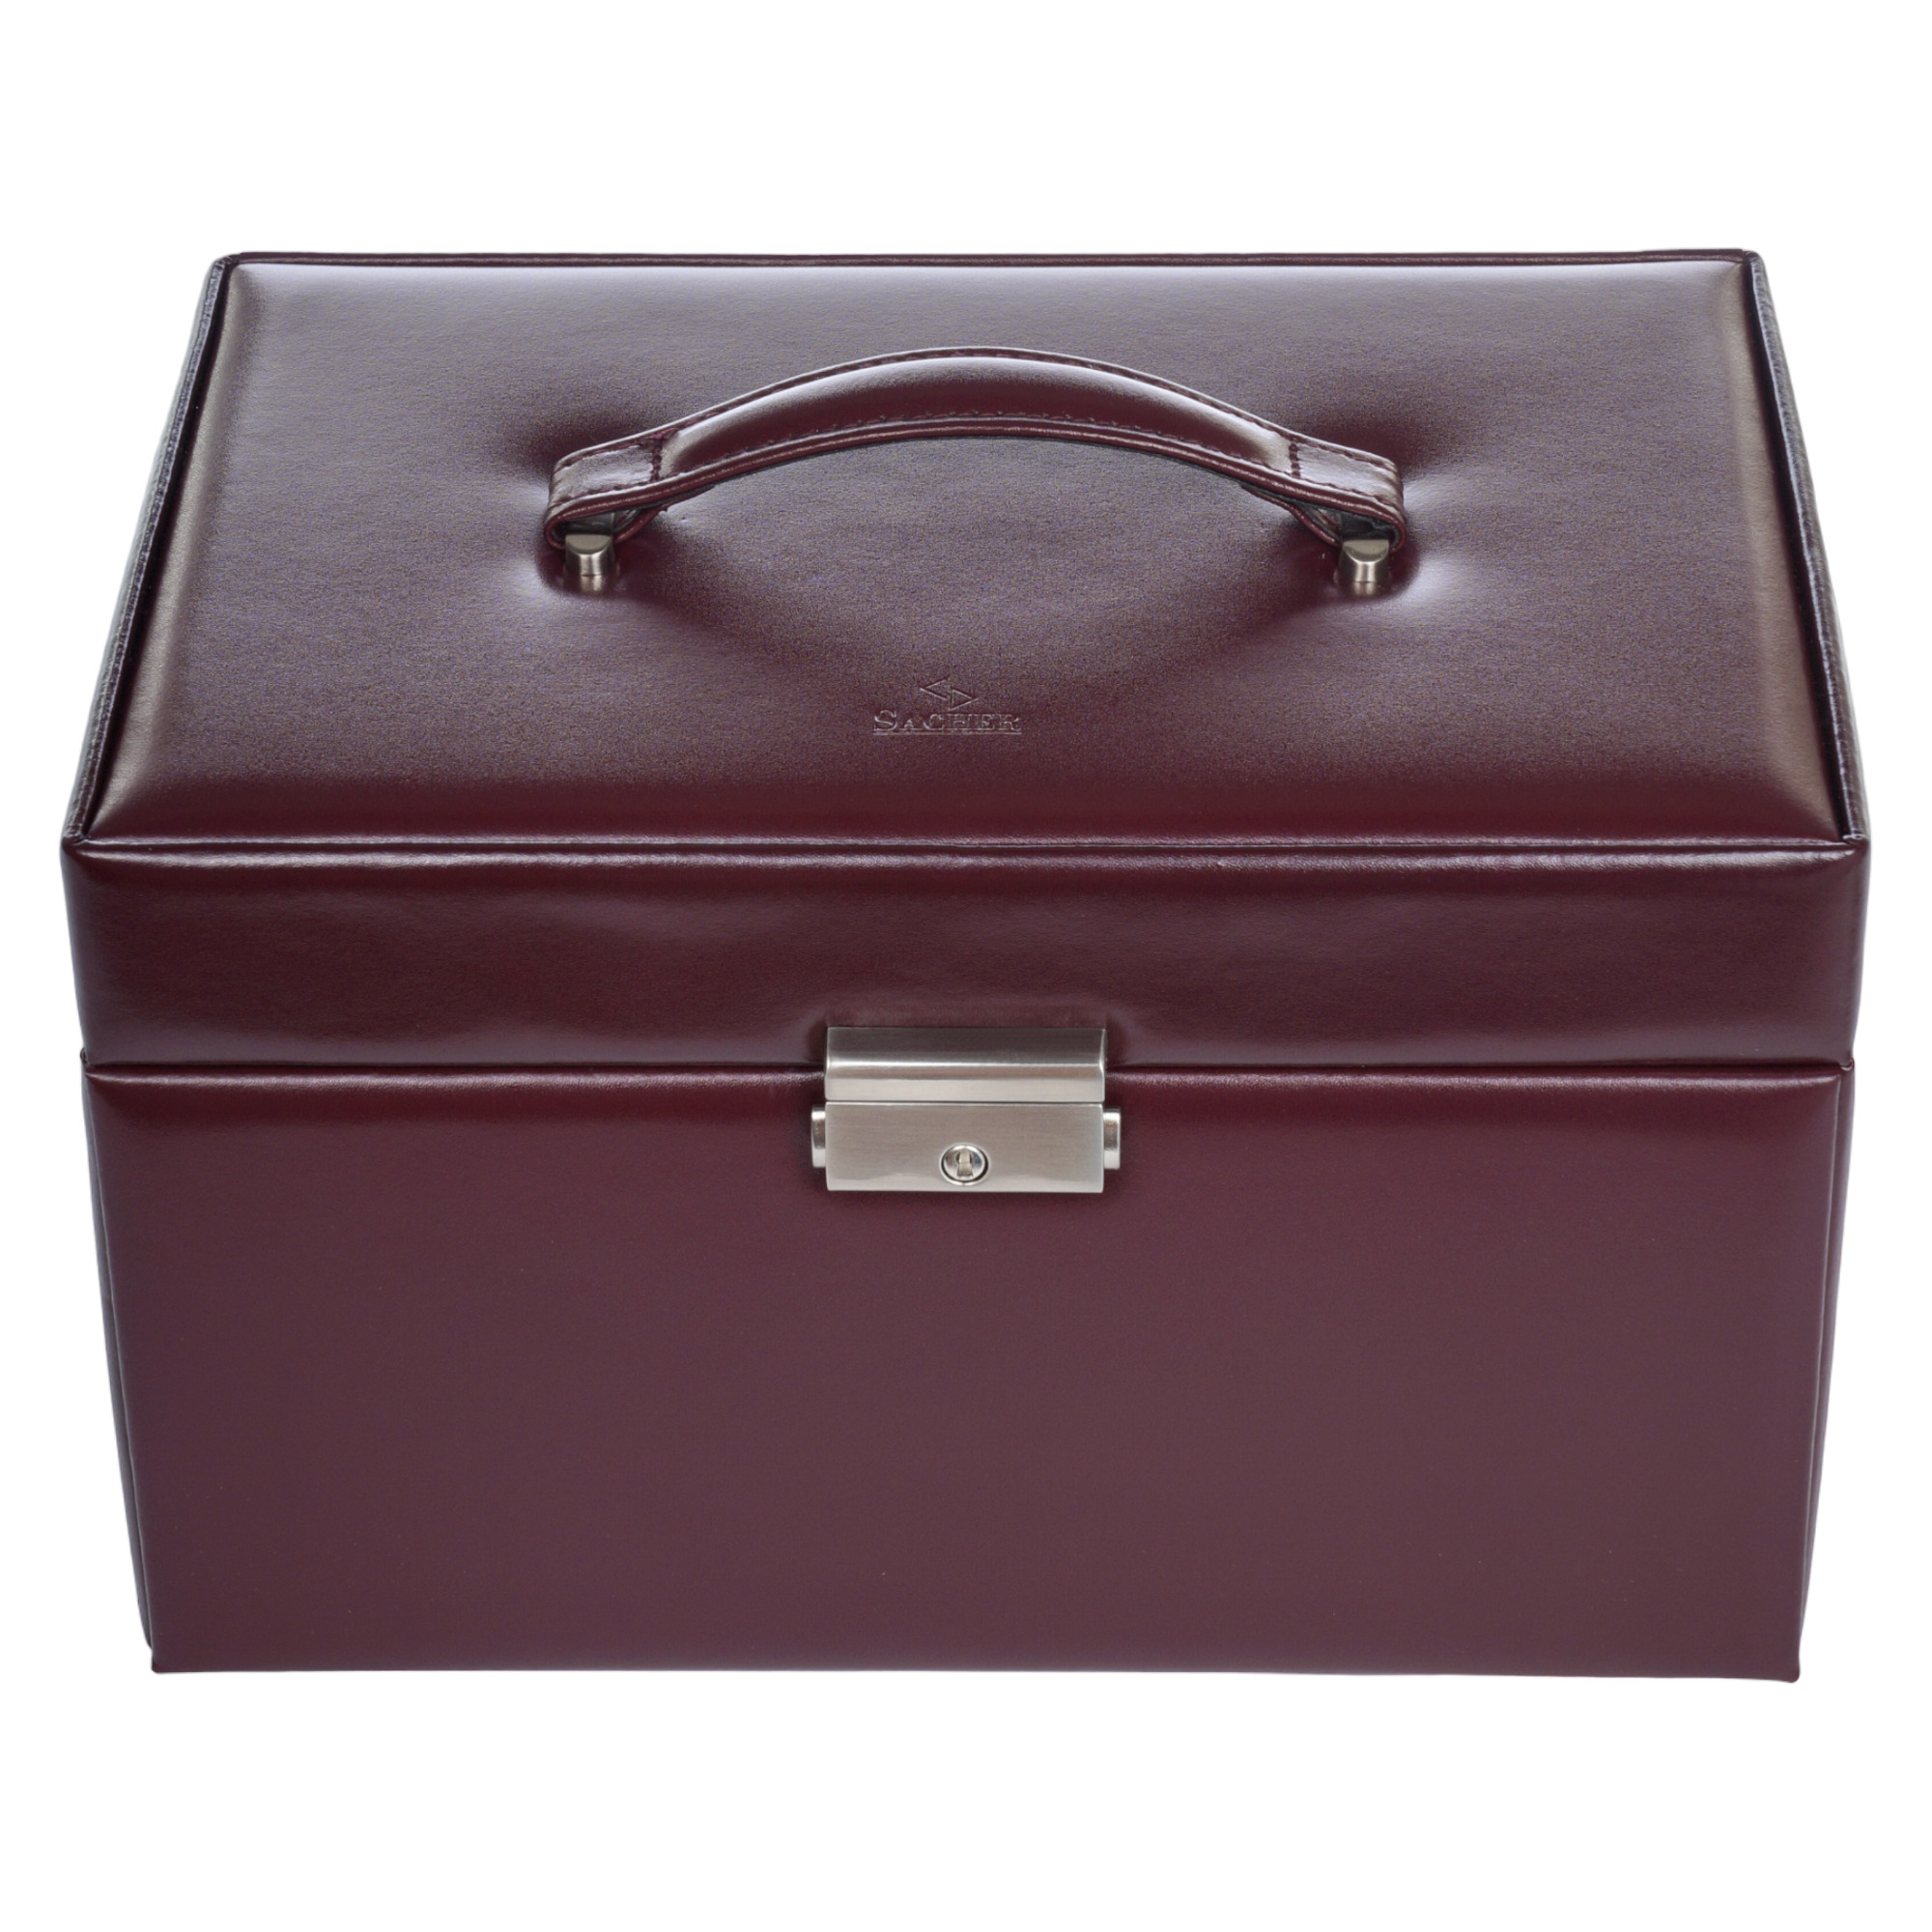 Jewellery box Katja new classic / bordeaux (leather) 